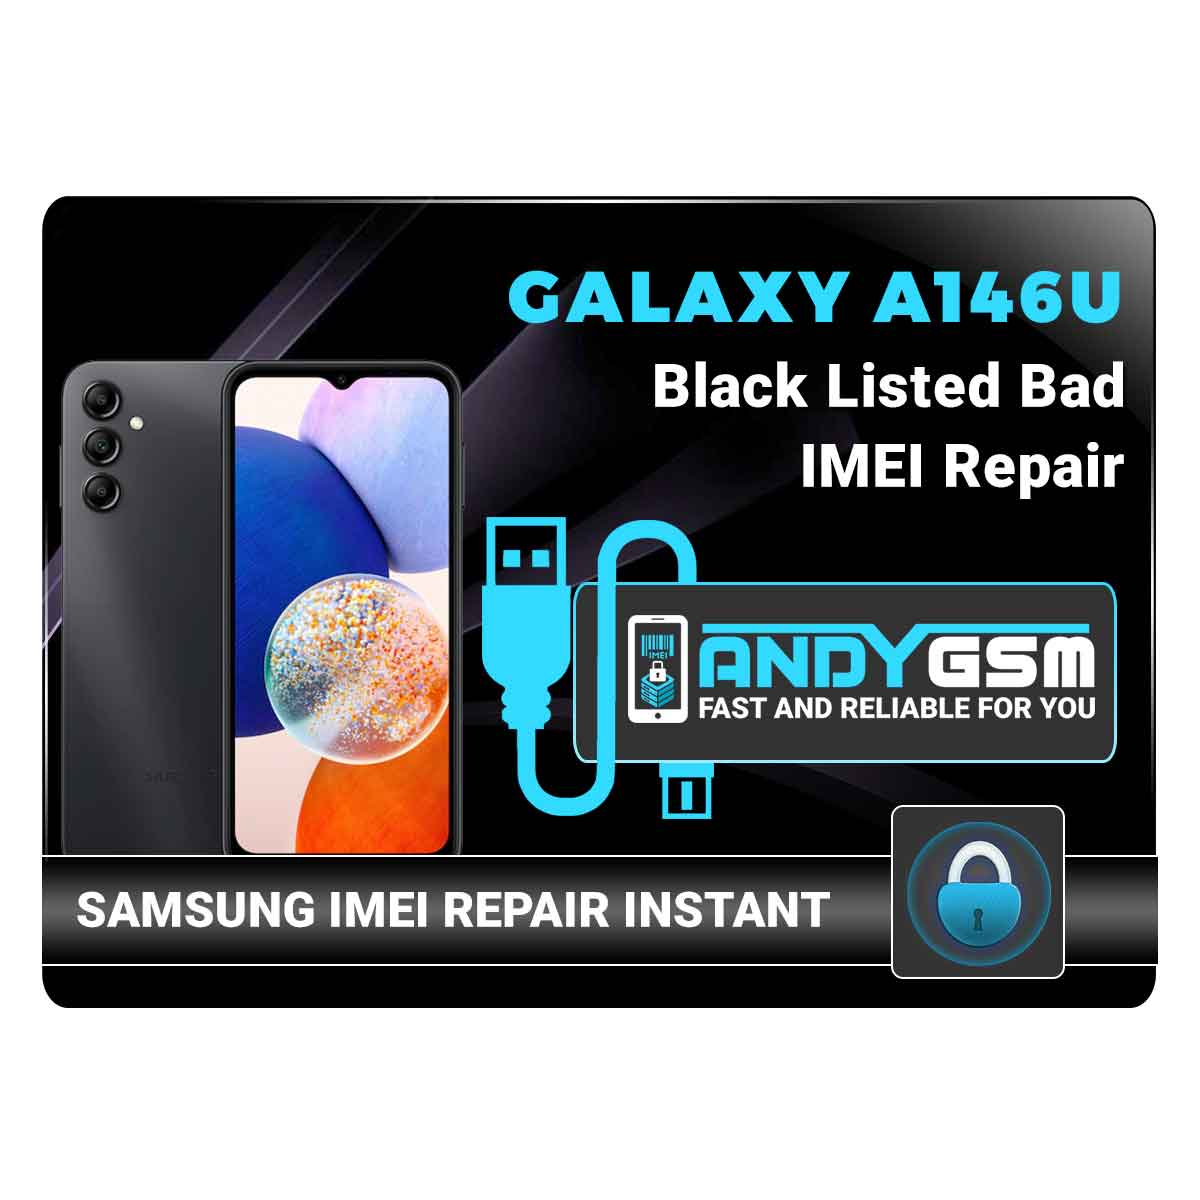 A146U Samsung Blacklisted Bad IMEI Repair